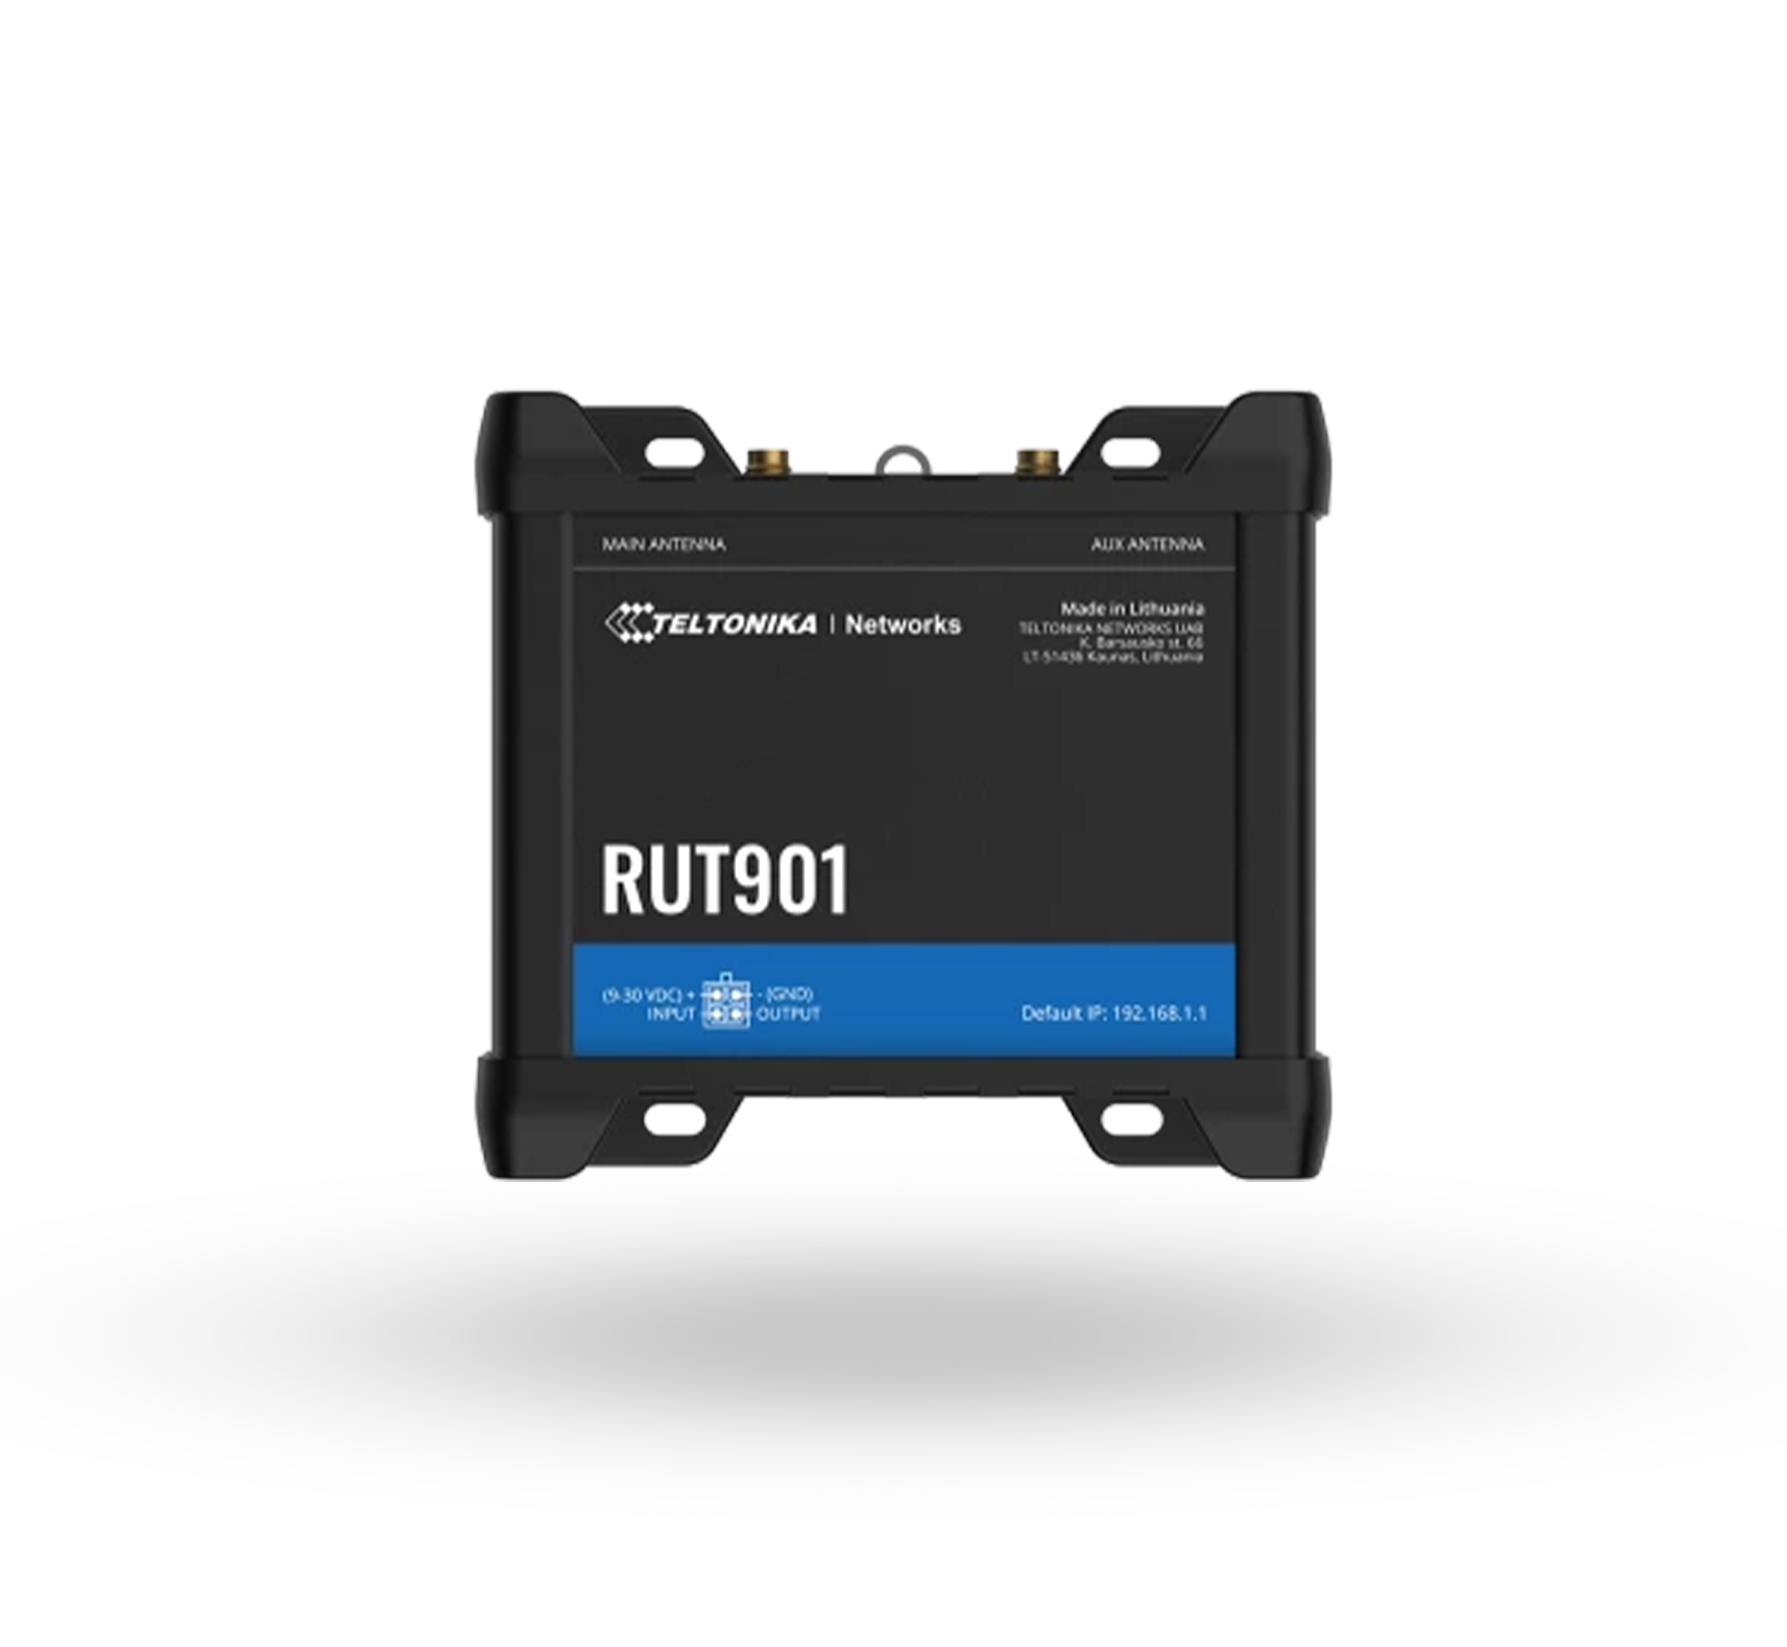 RUT901 LTE Cat 4 Router + Optional Data SIM